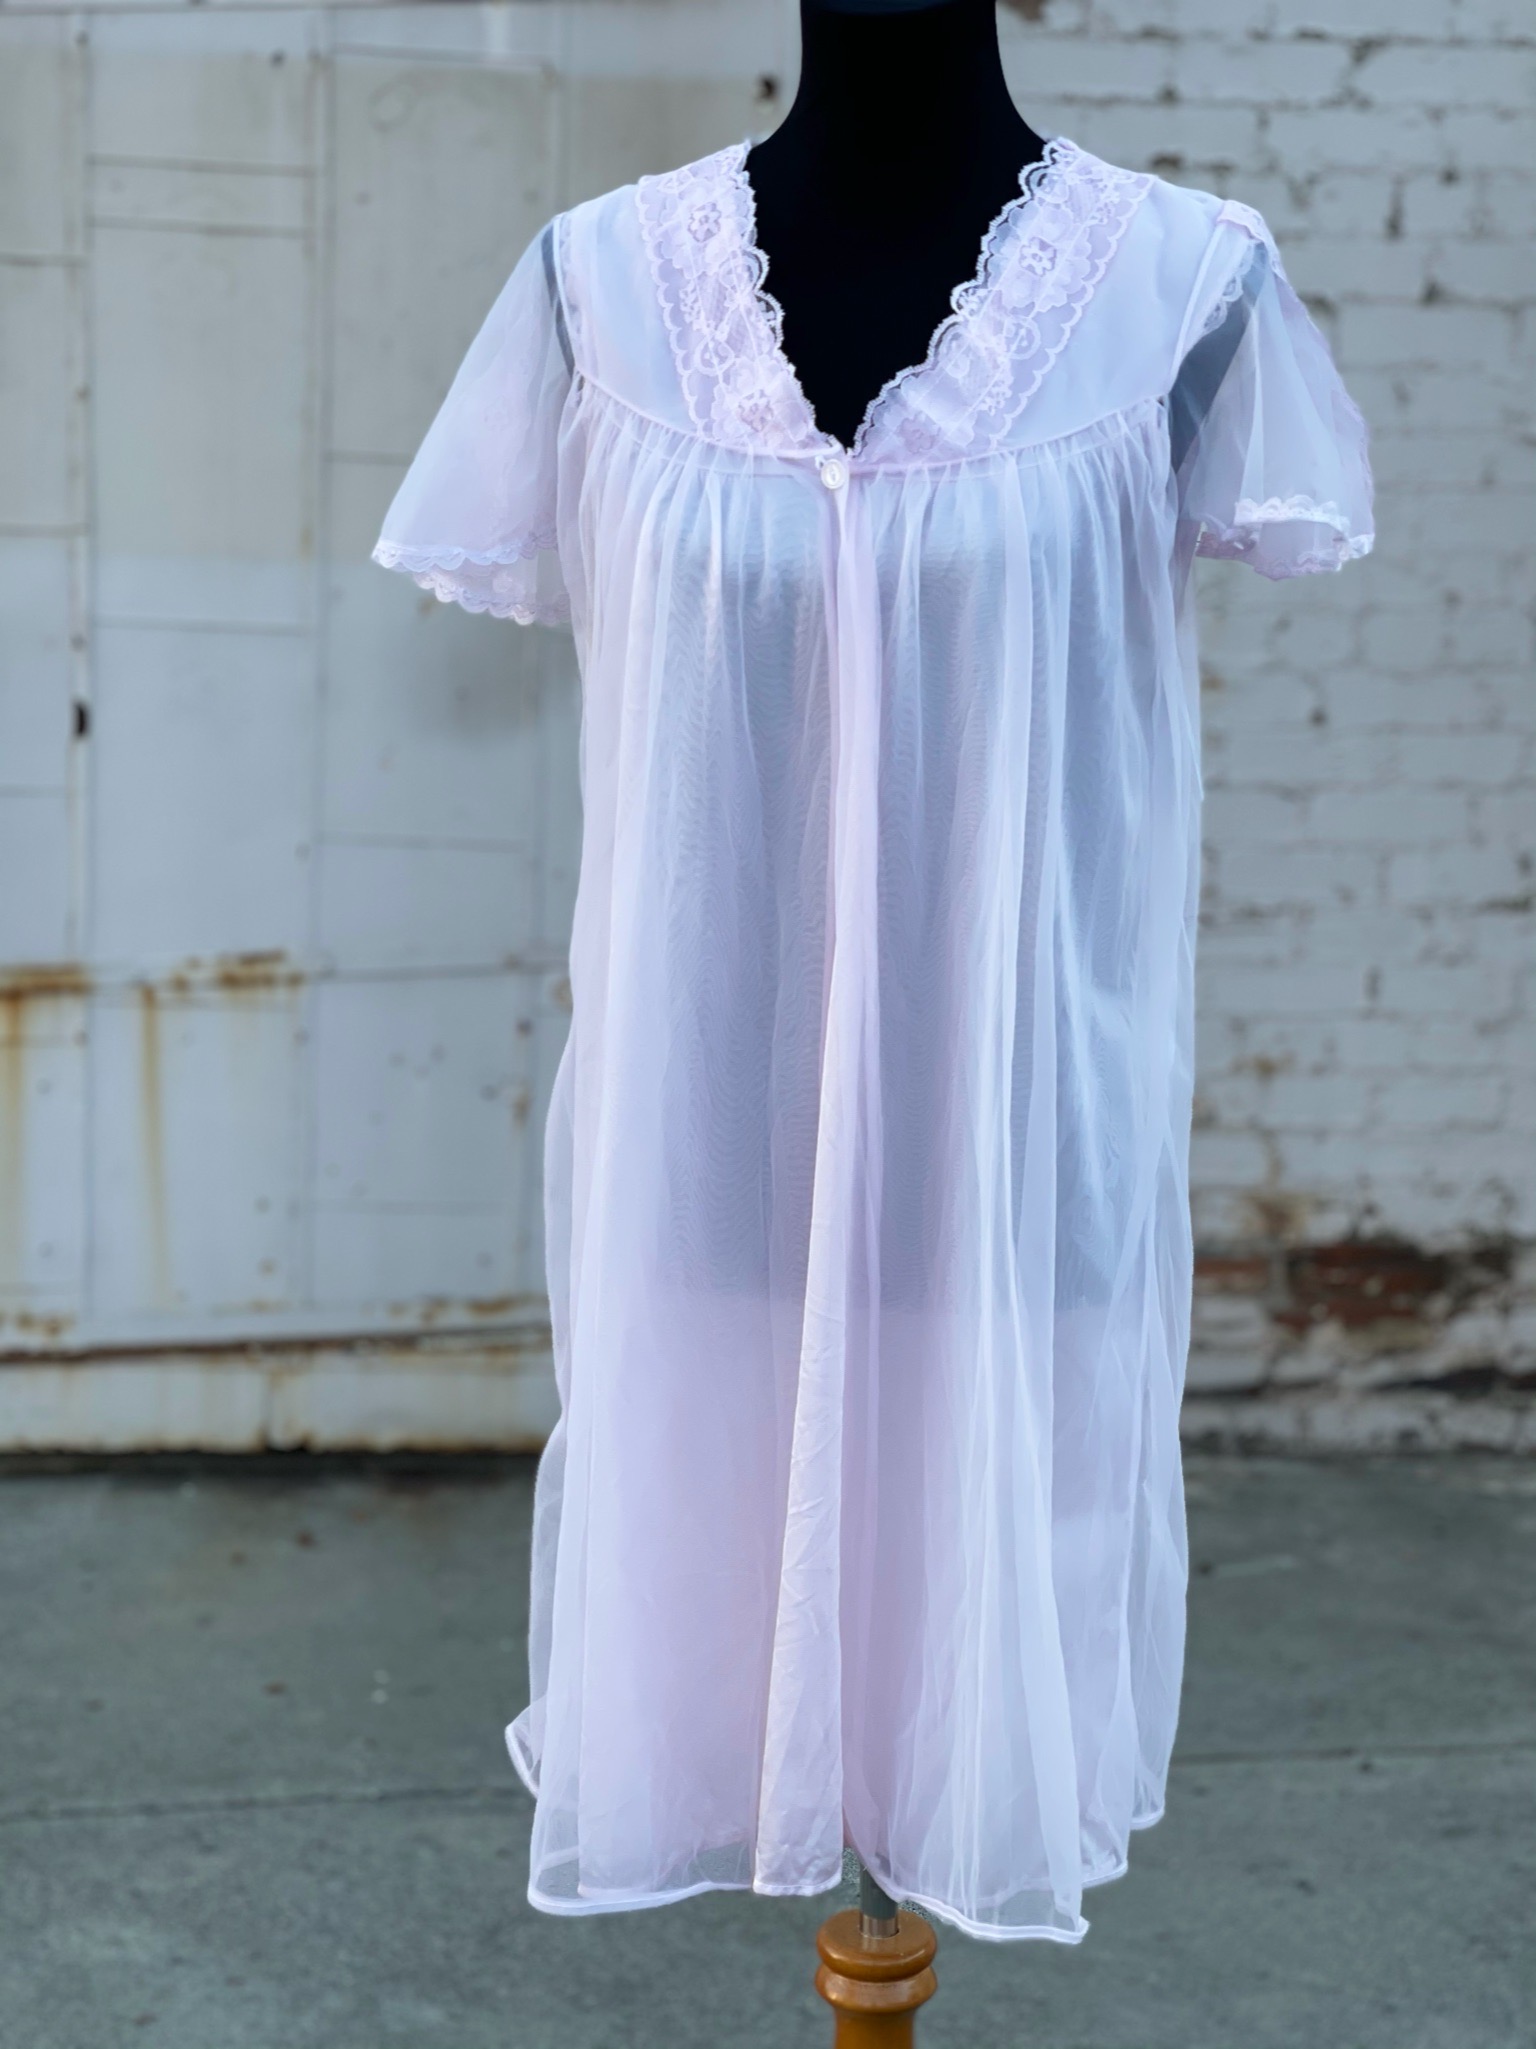 Vintage peignoir set size large vintage lingerie pale pink nightgown and robe 100% nylon